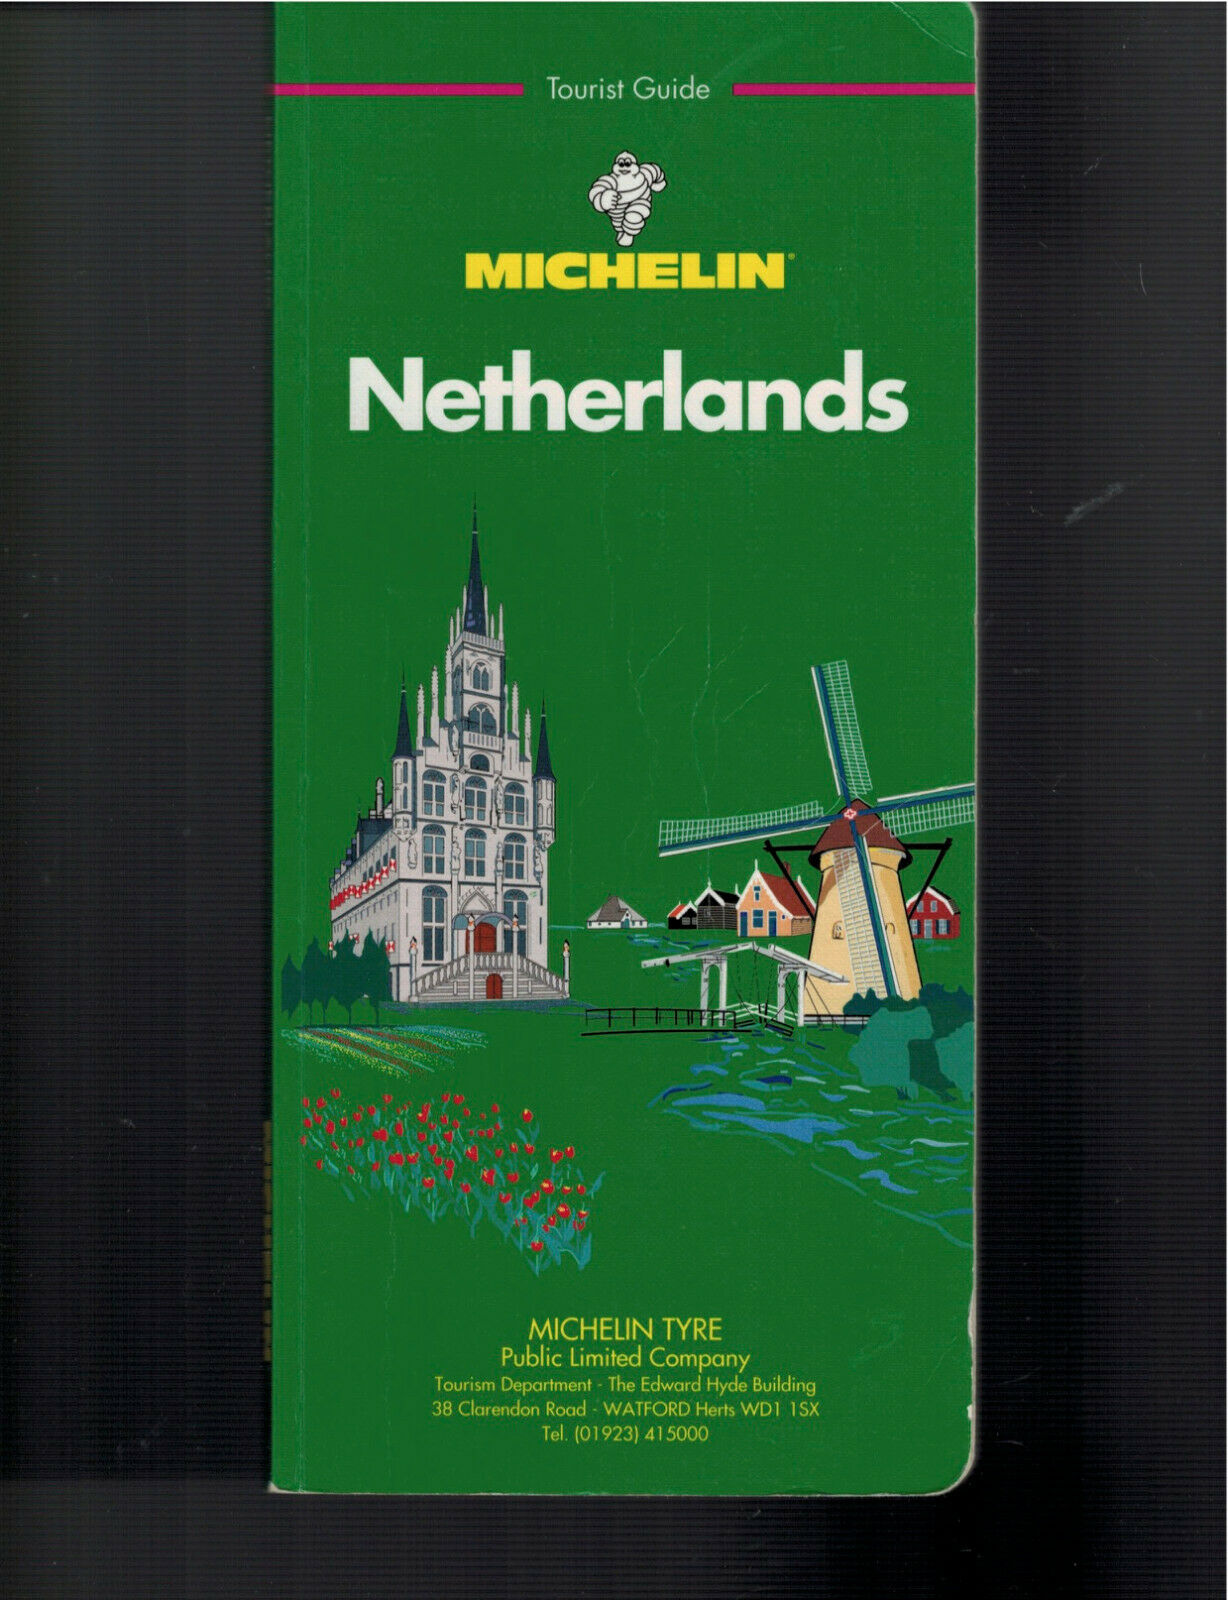 MICHELIN NETHERLANDS TOURIST GUIDE